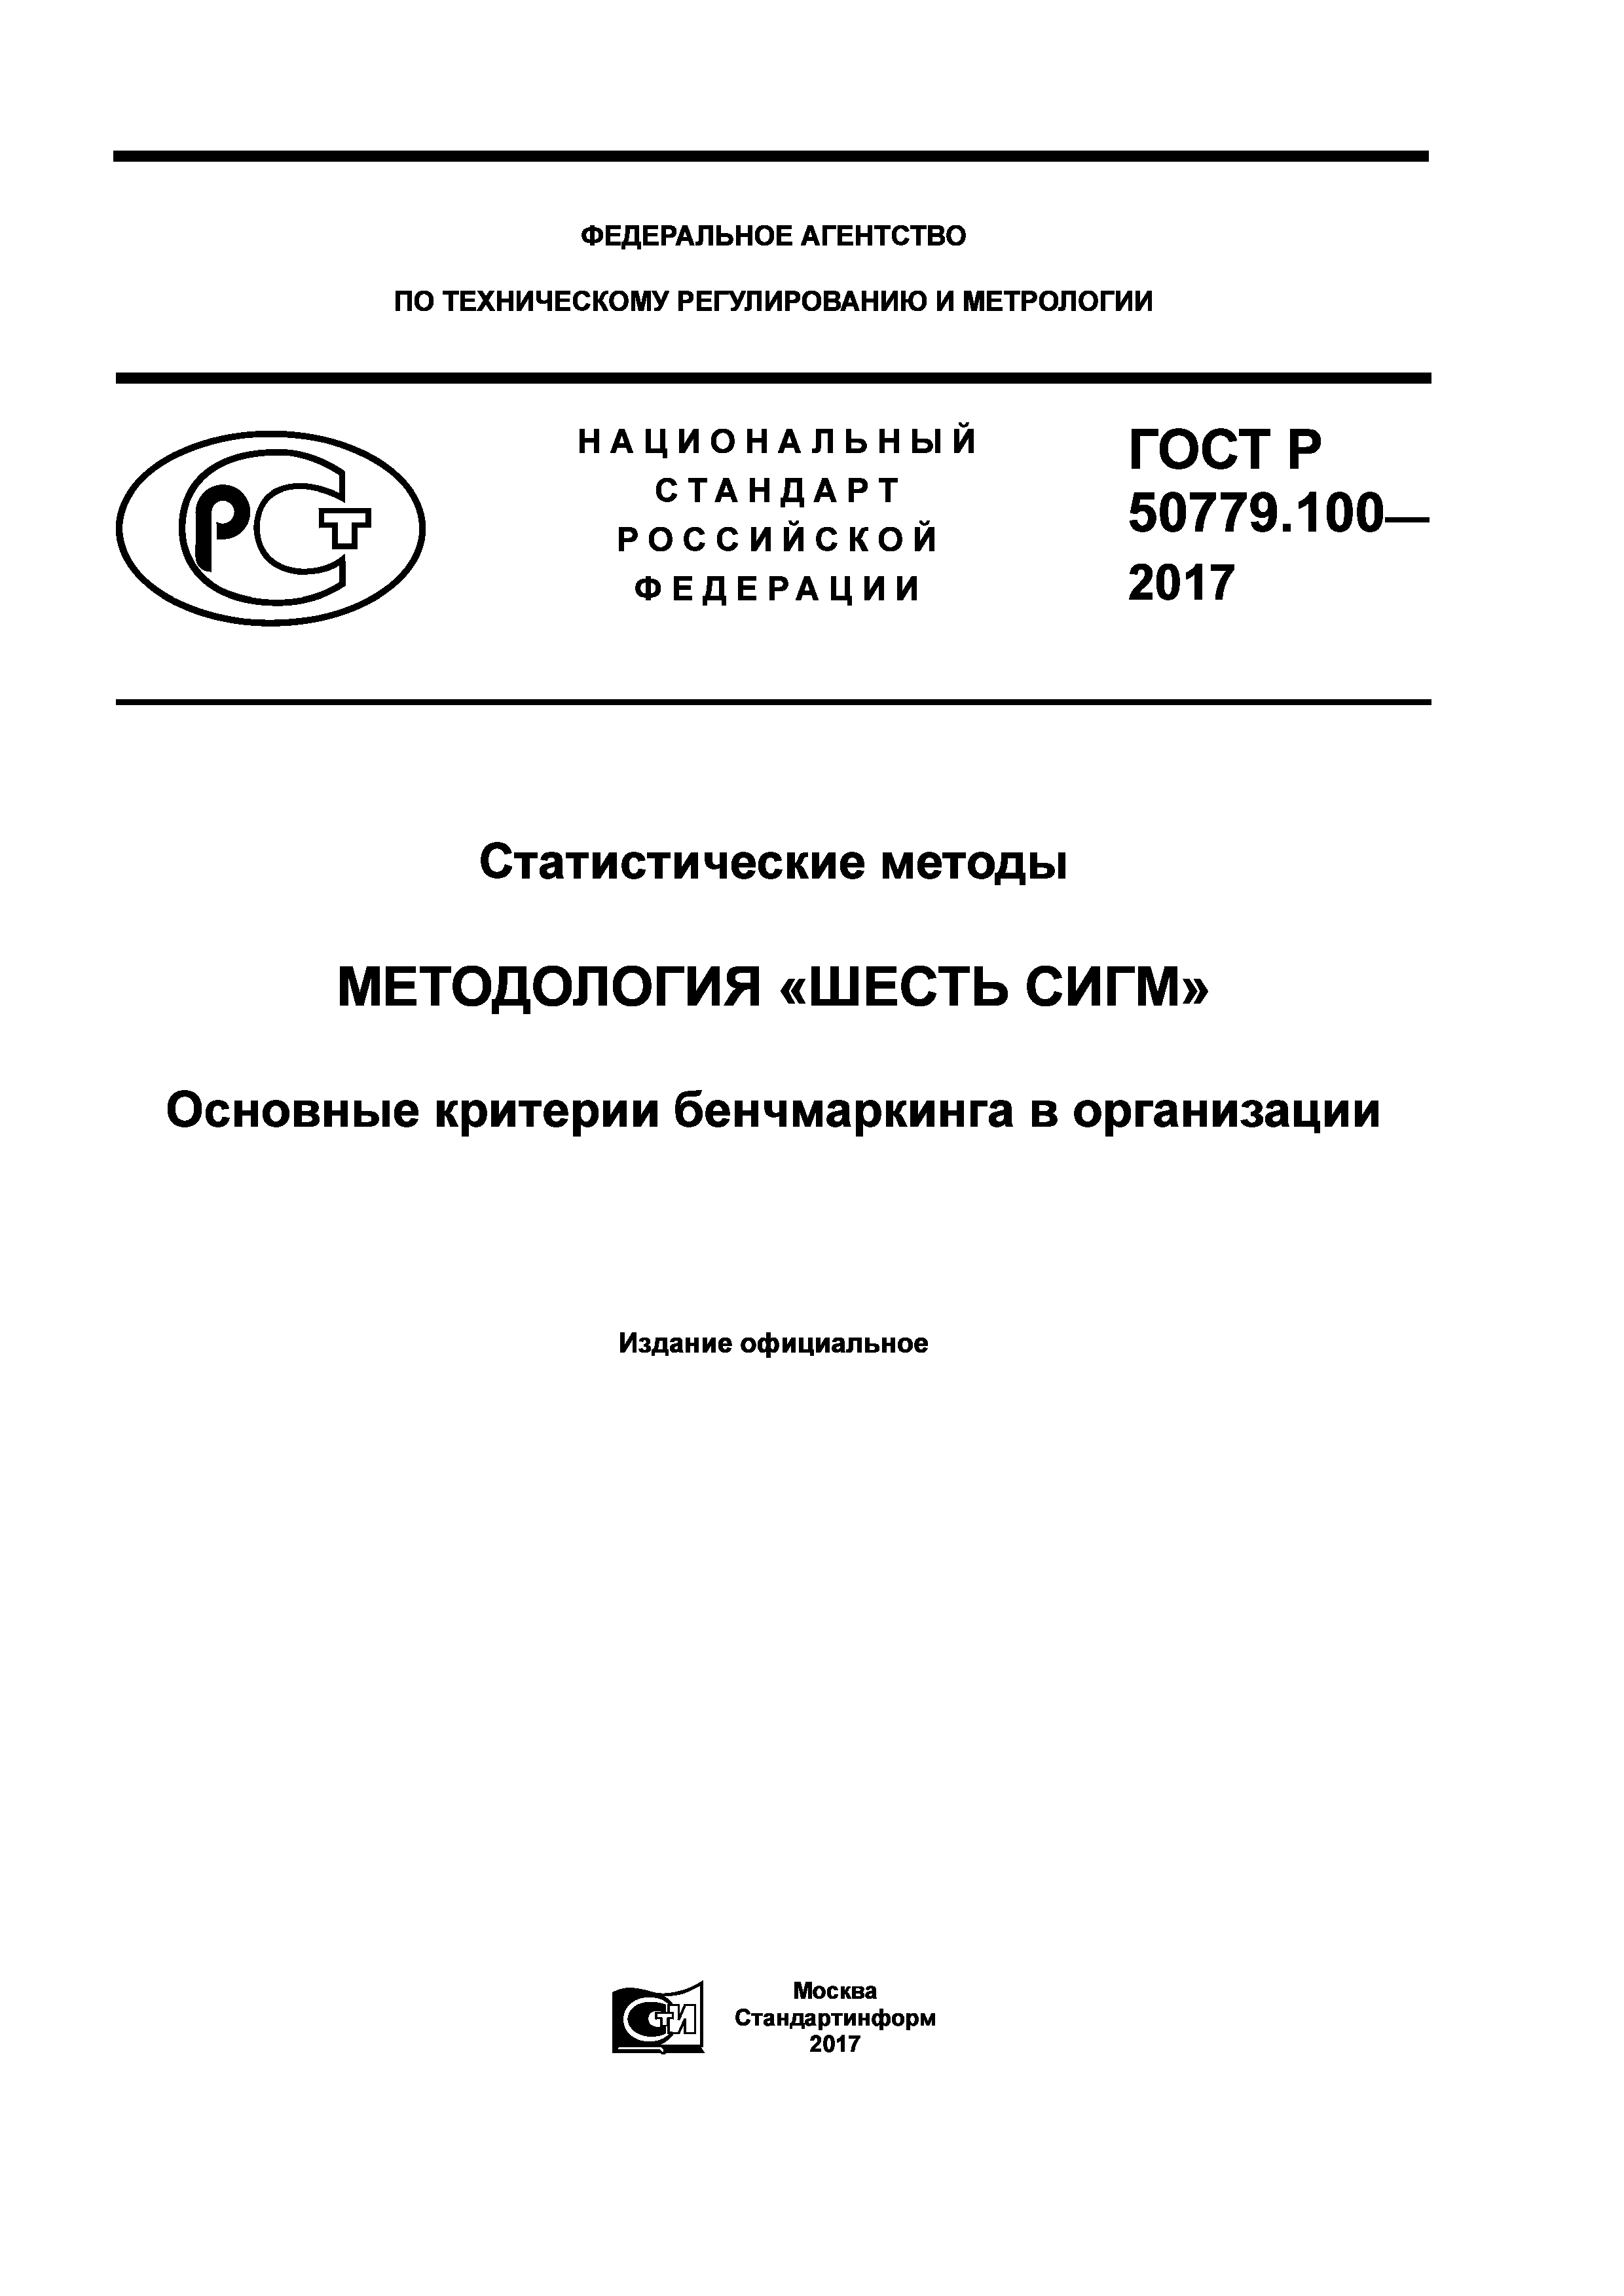 ГОСТ Р 50779.100-2017